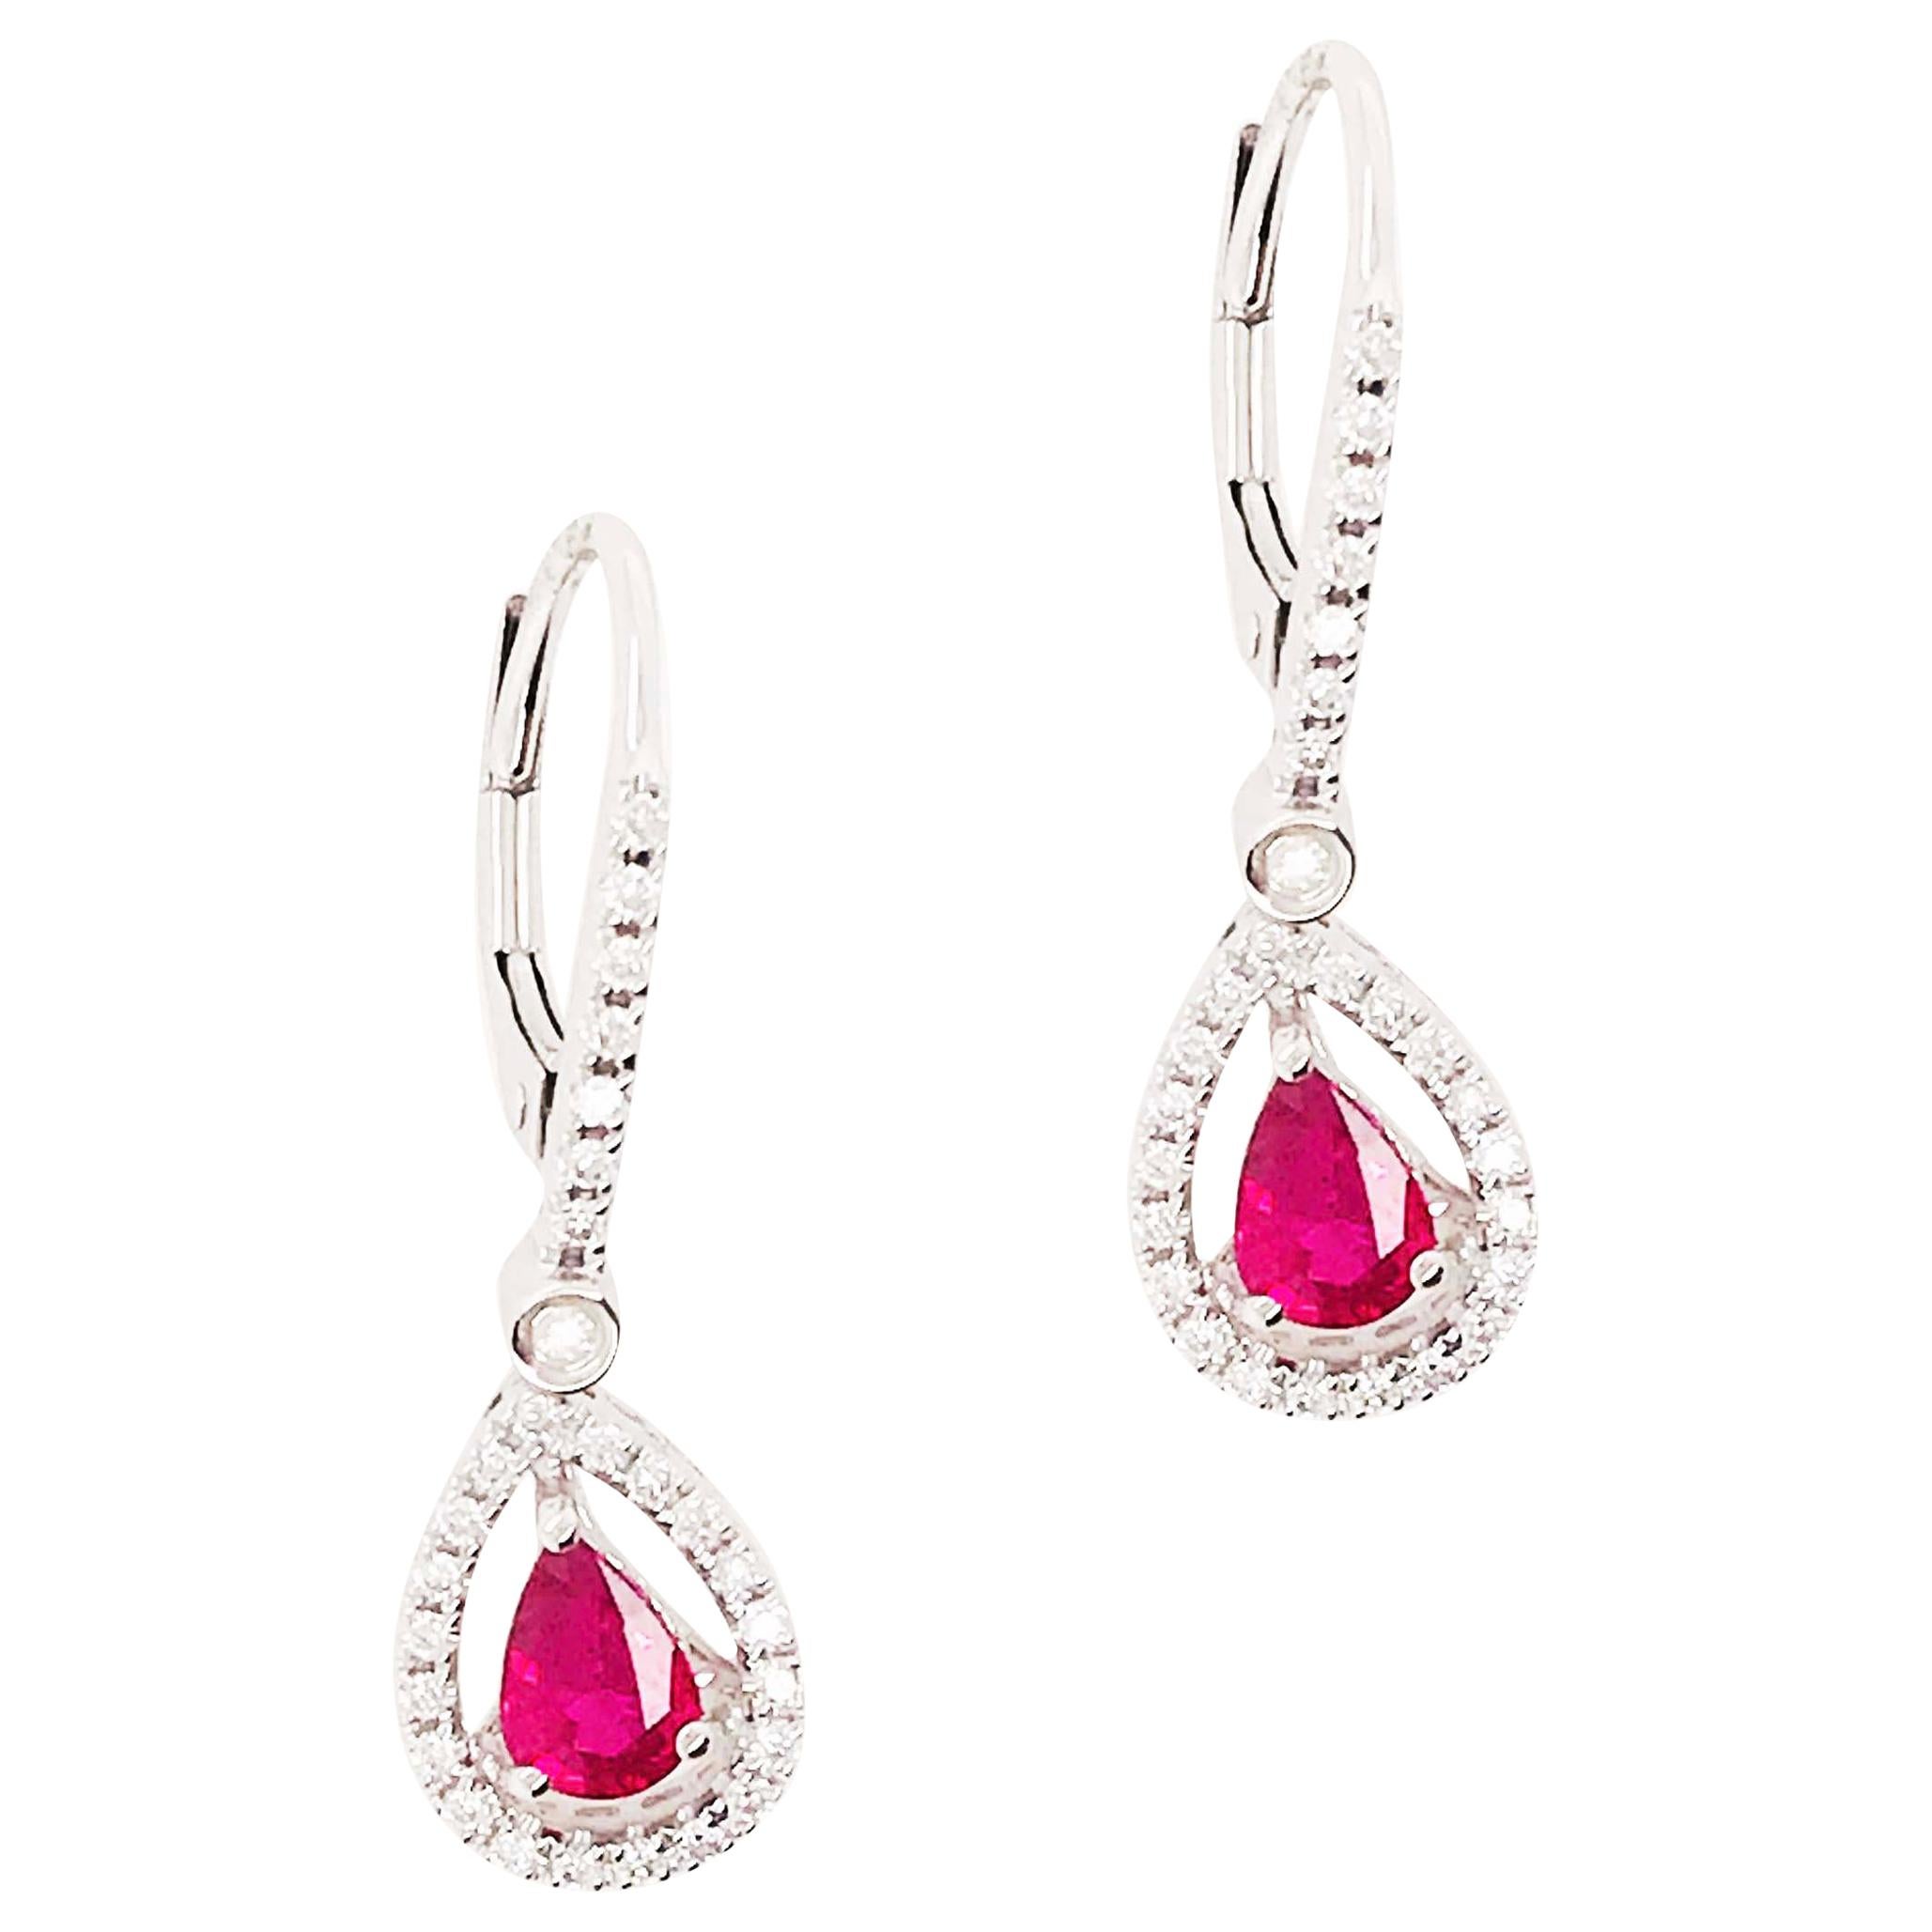 Ruby and Diamond Earring Dangles, 18 Karat Gold Ruby and Diamond July Earrings